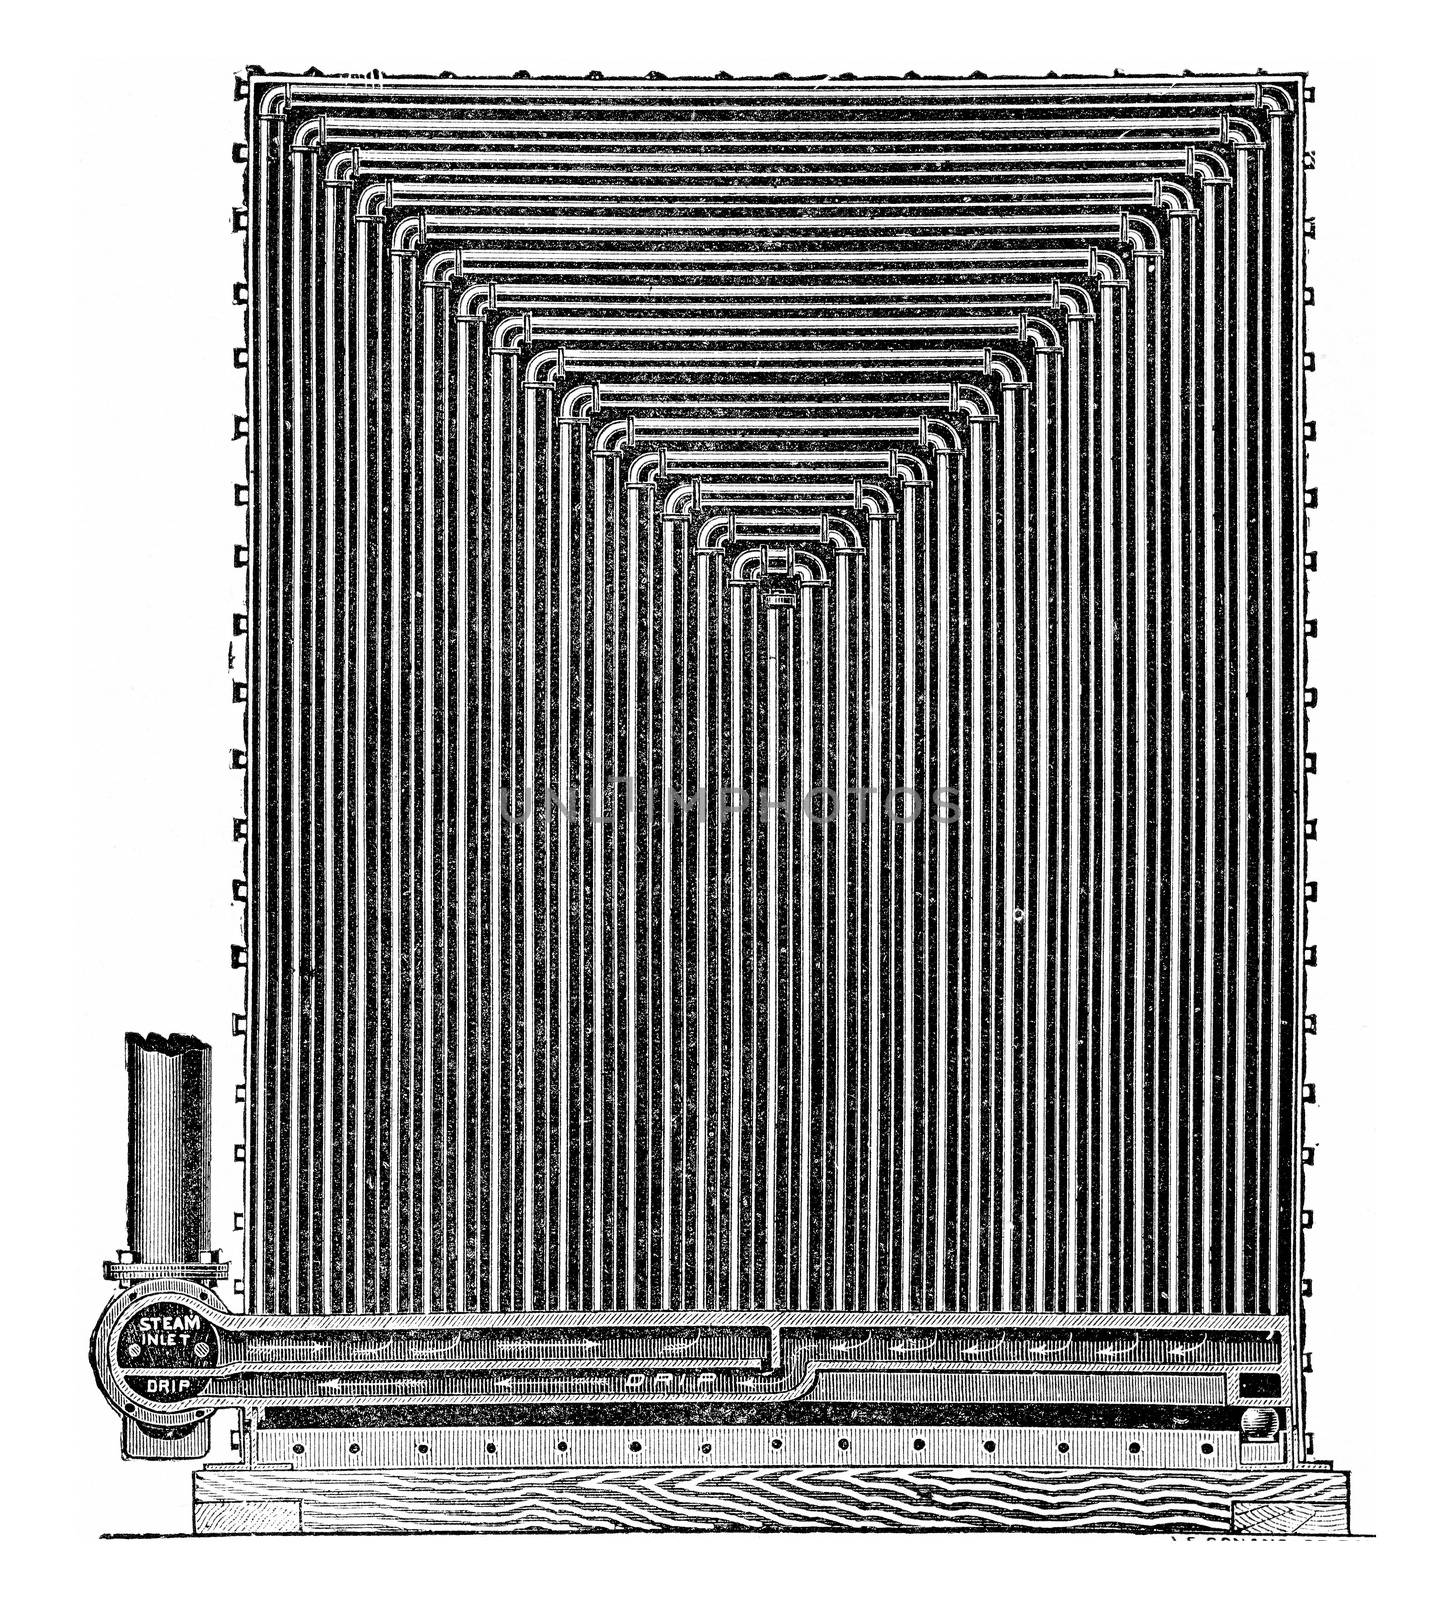 Air Heater Sturtevant, vintage engraved illustration.
